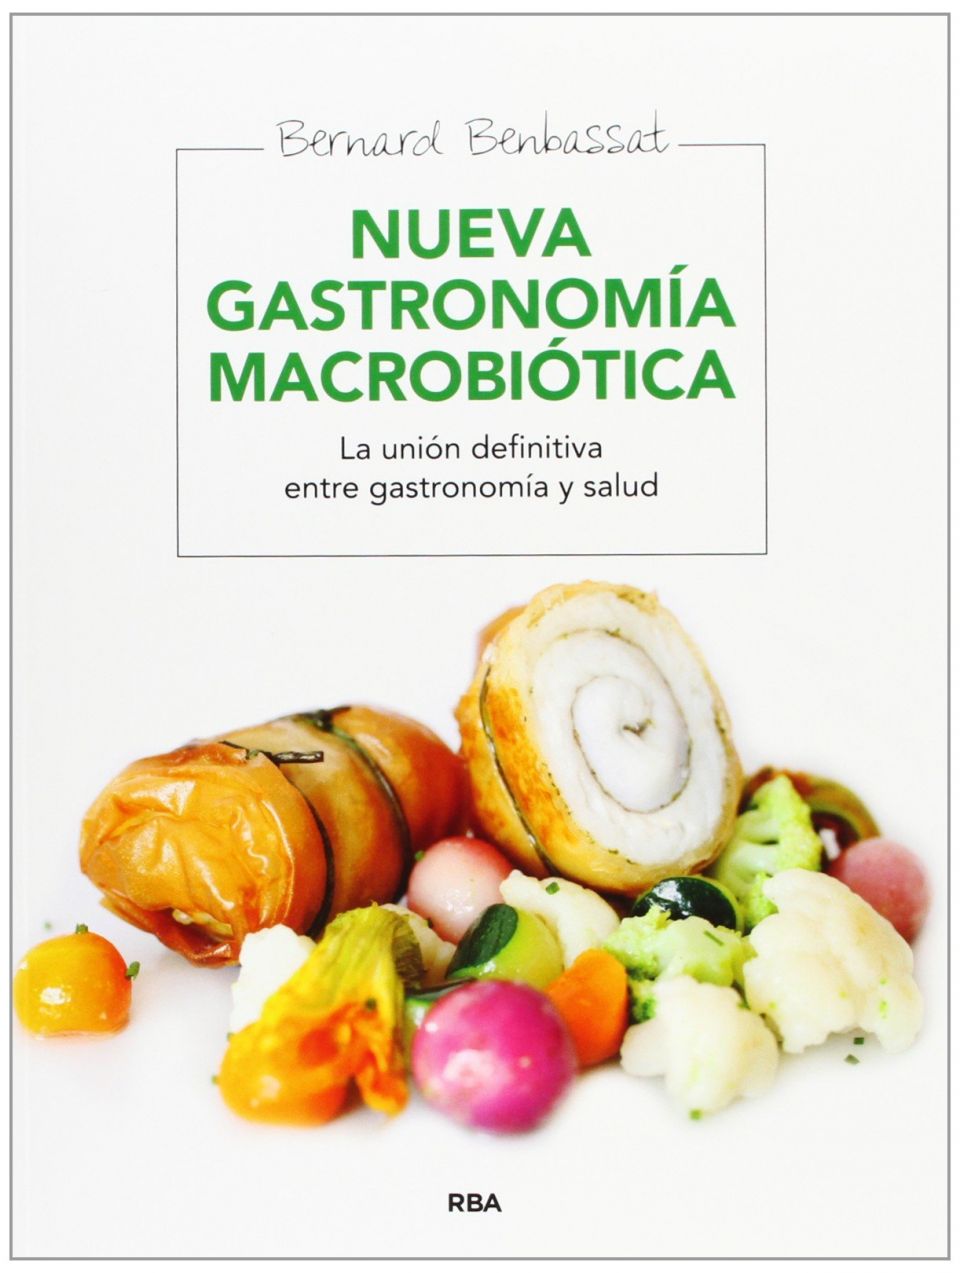 bernard benbassat nueva gastronomía macrobiótica